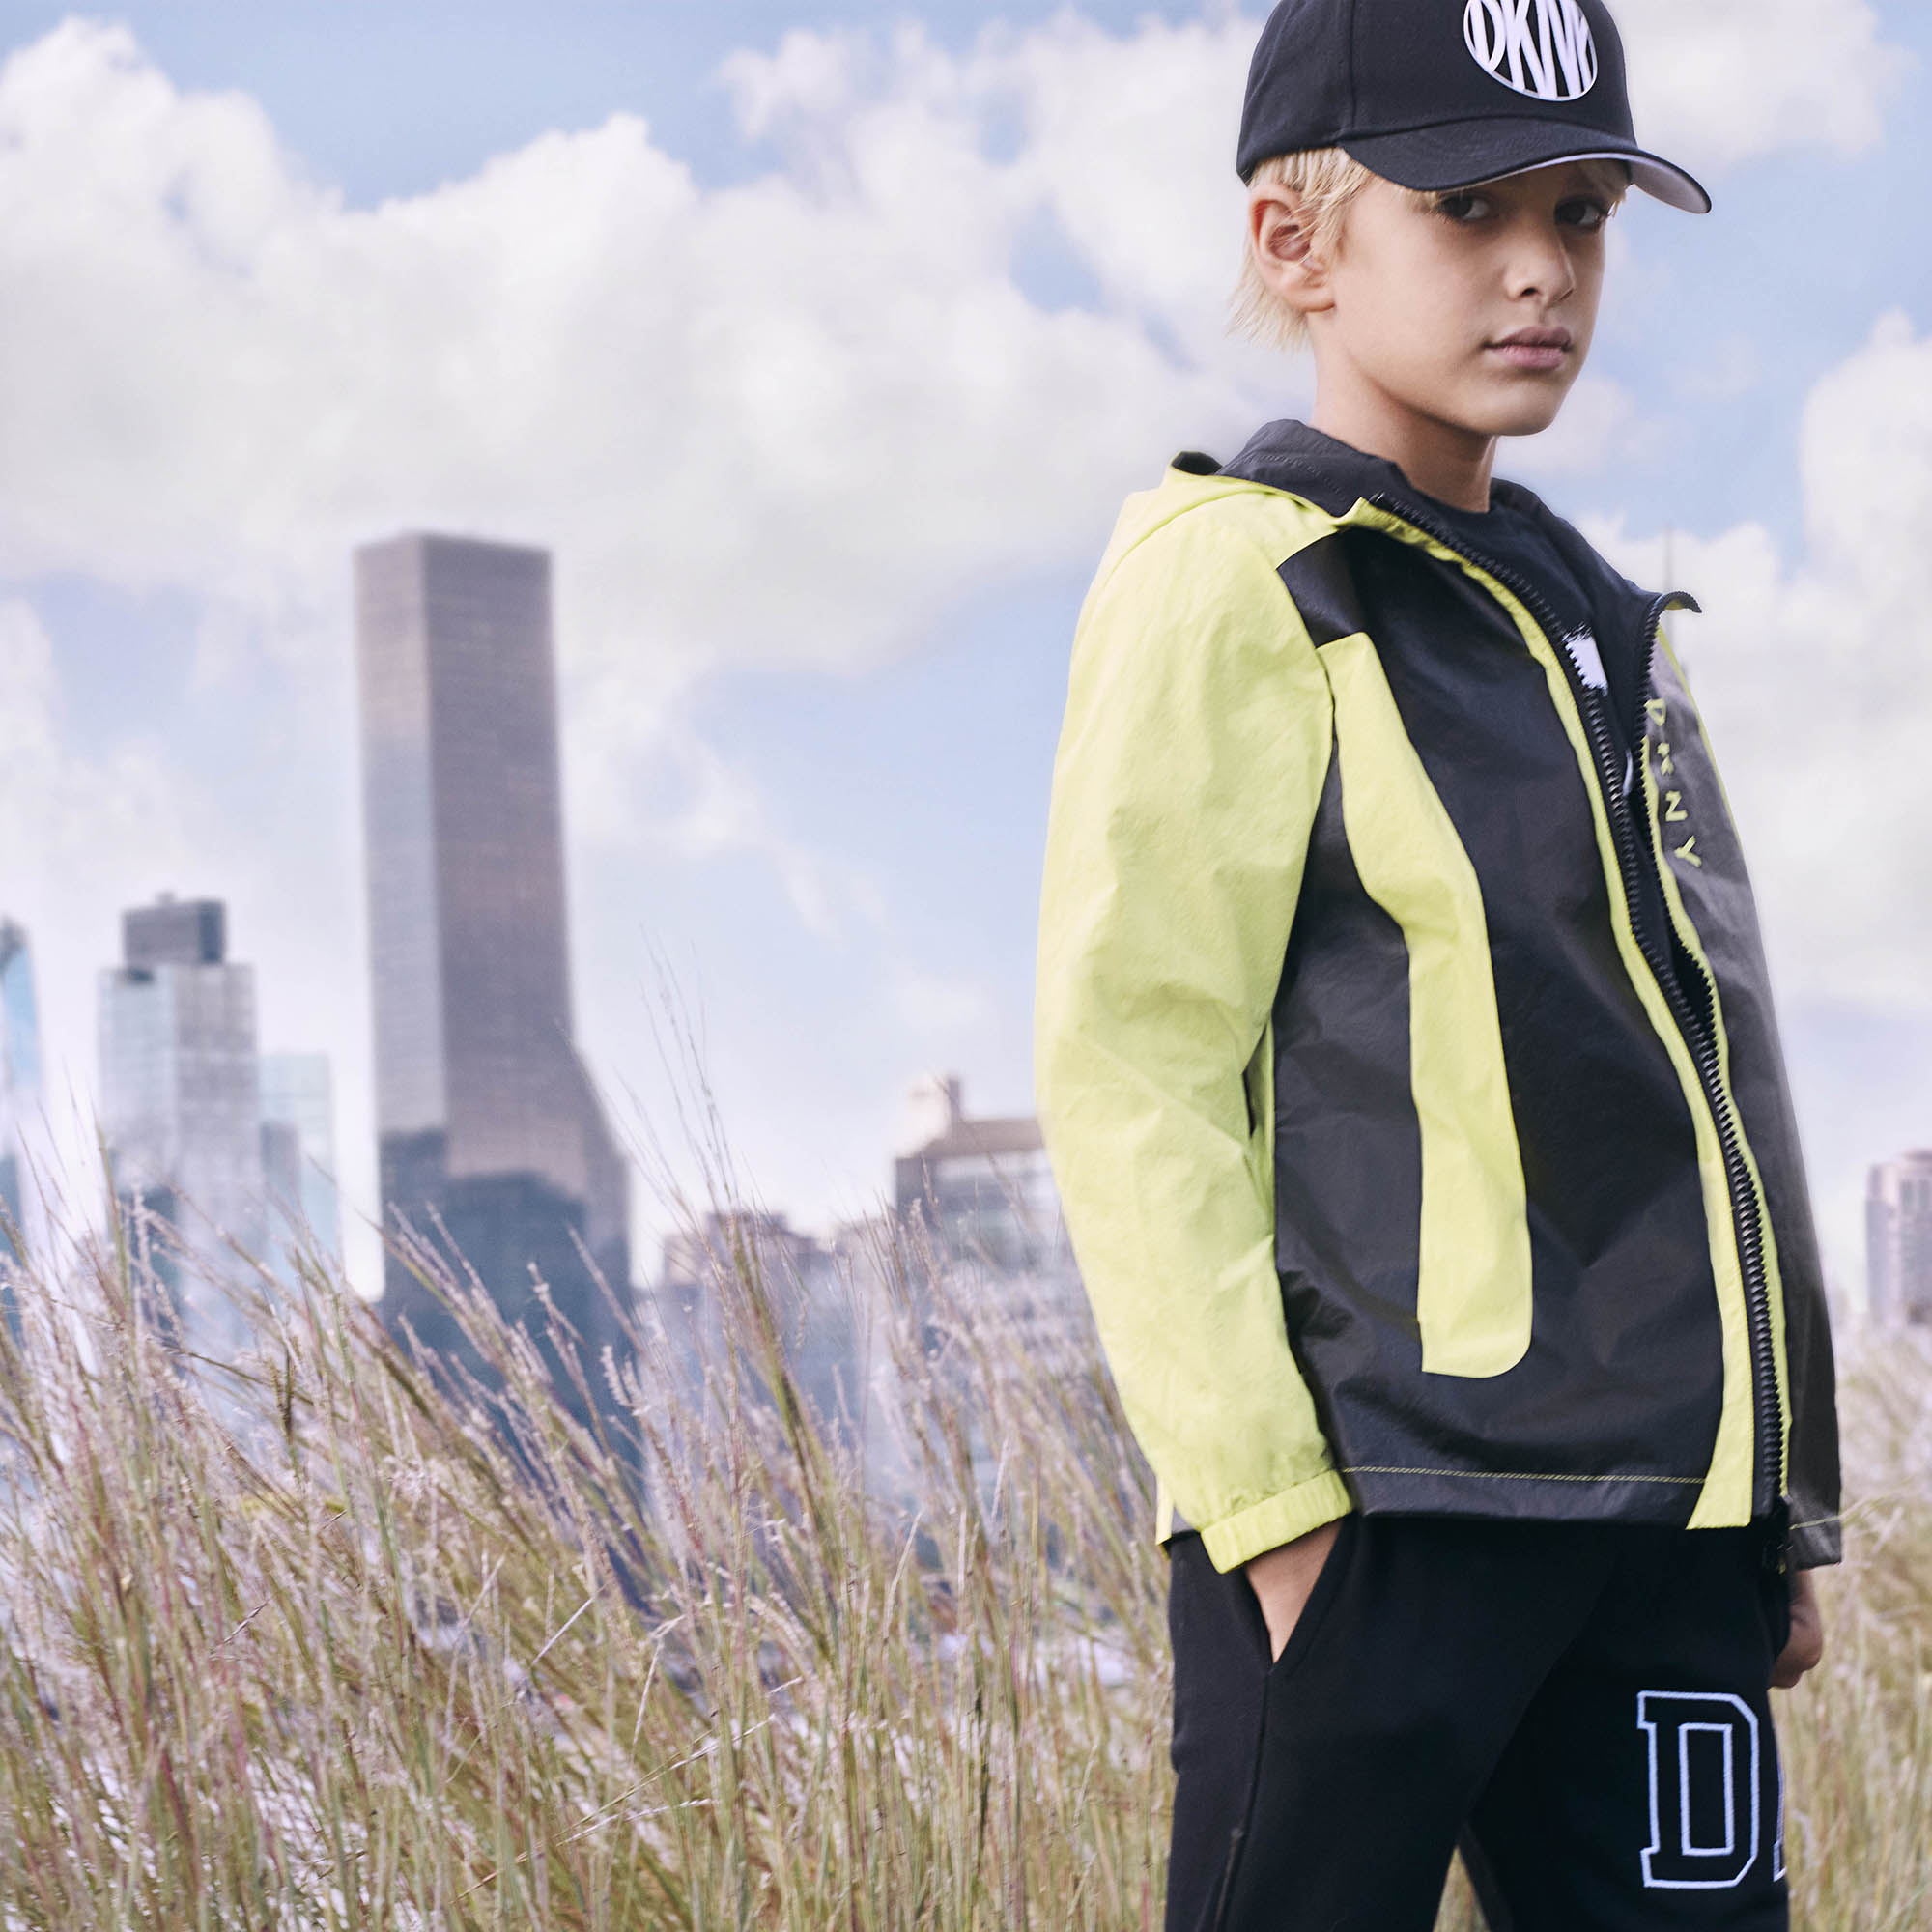 Water-repellent zip-up jacket DKNY for BOY